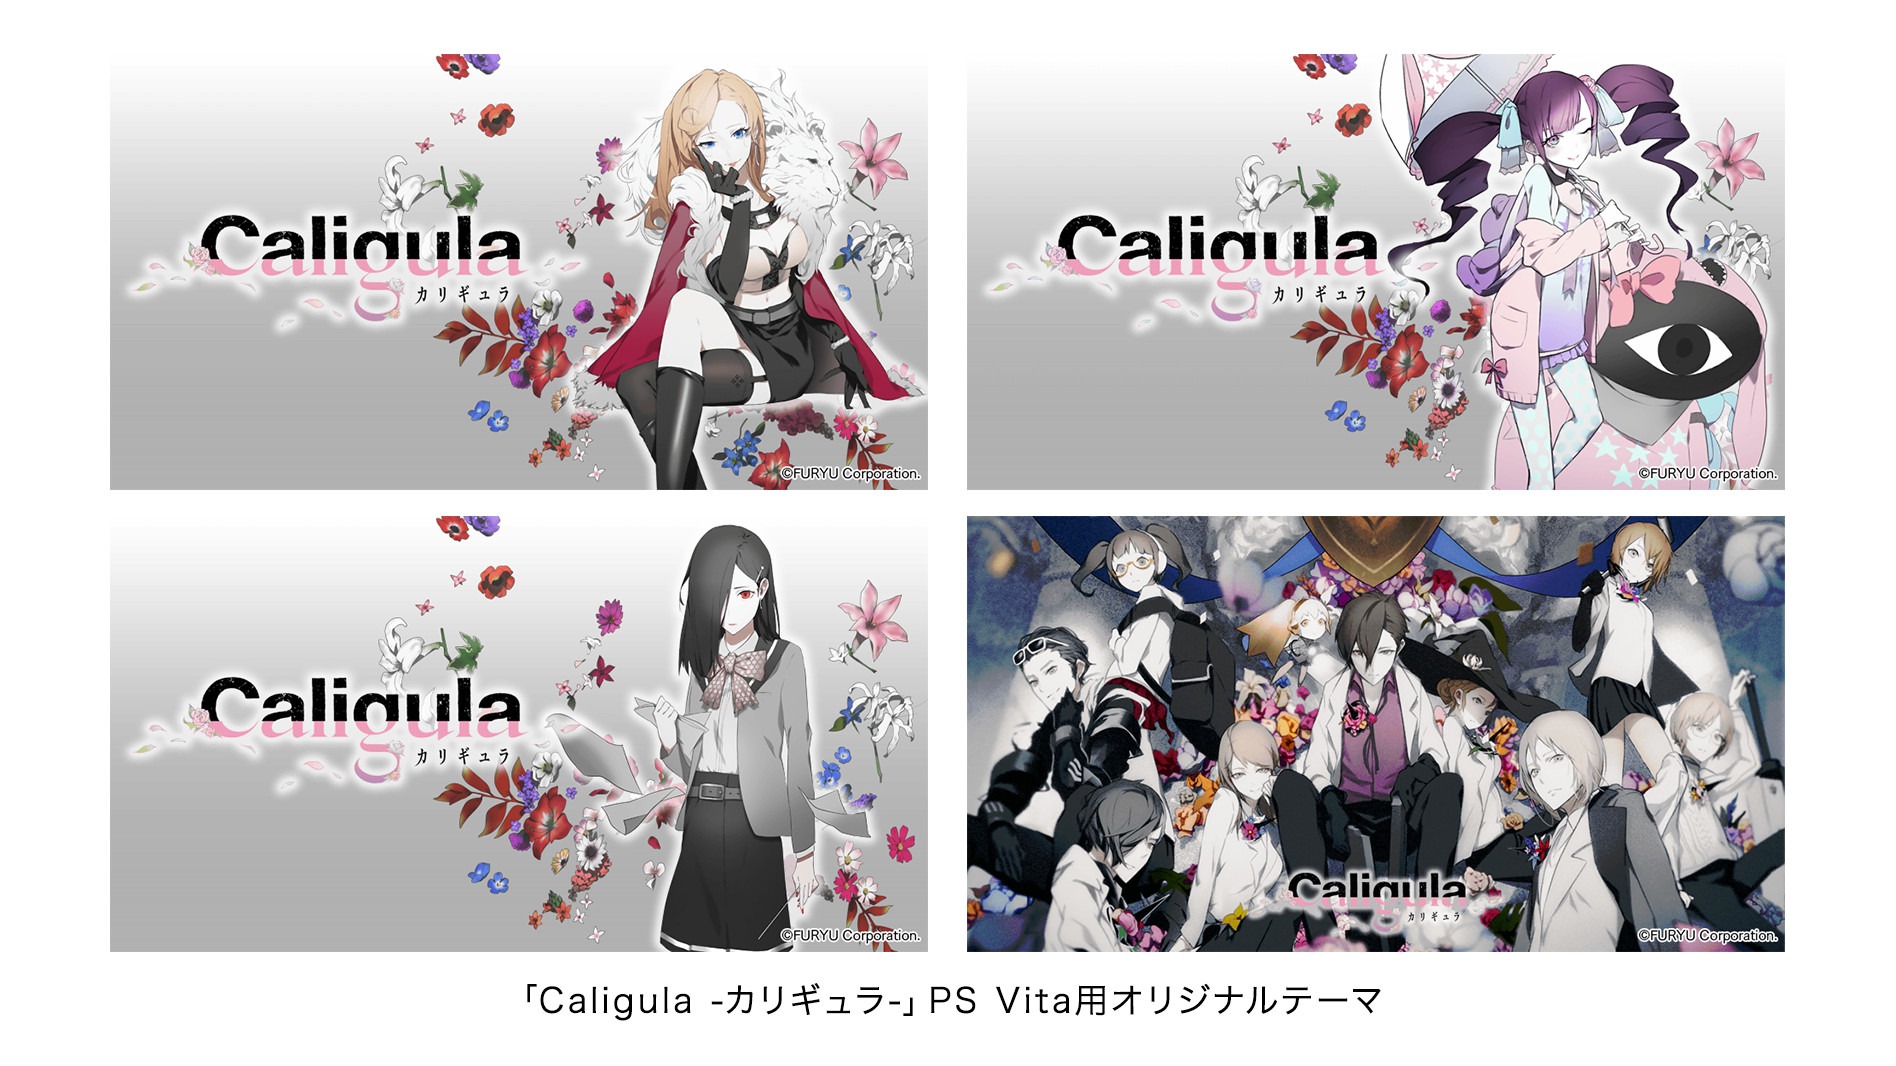 PS VITA Caligula -カリギュラ- Limited Edition(全4種類)が数量限定で 